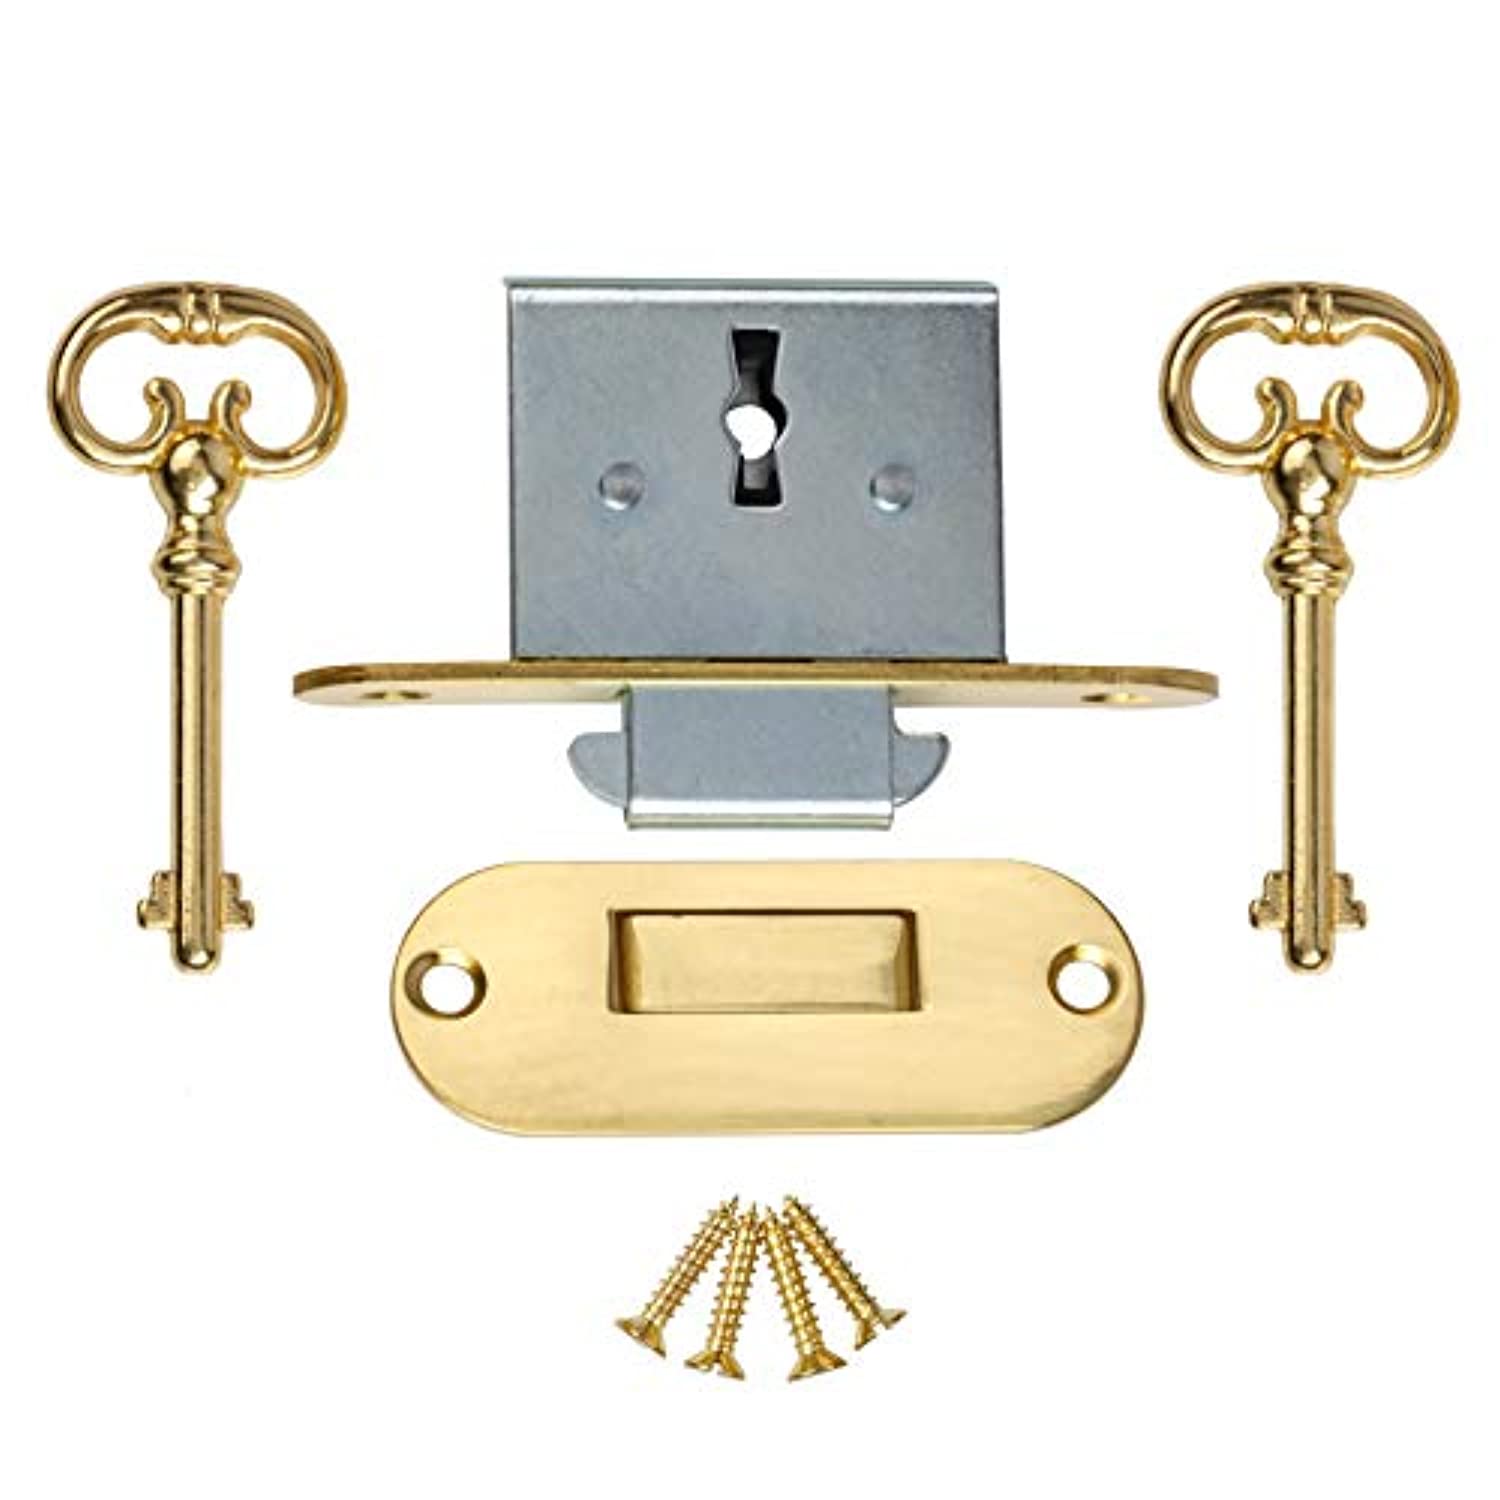 Full Mortise Cabinet Door or Drawer Lock W/Plate and Skeleton Key - Antique Furniture Hardware | UA-035-L